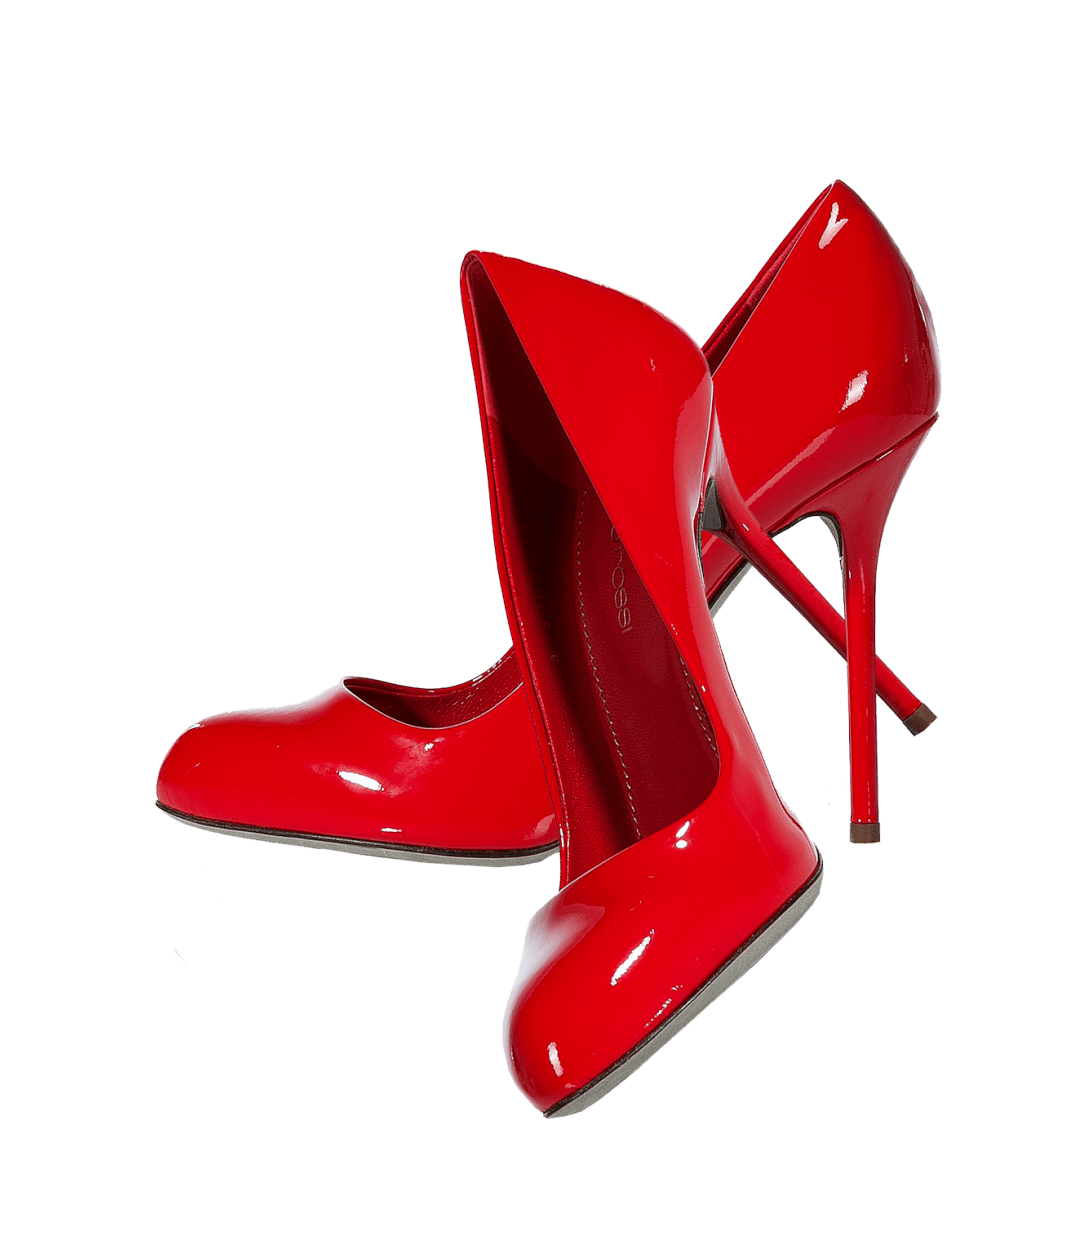 Shiny Pair Of Red Women Shoes Transparent PNG Image pngteam.com